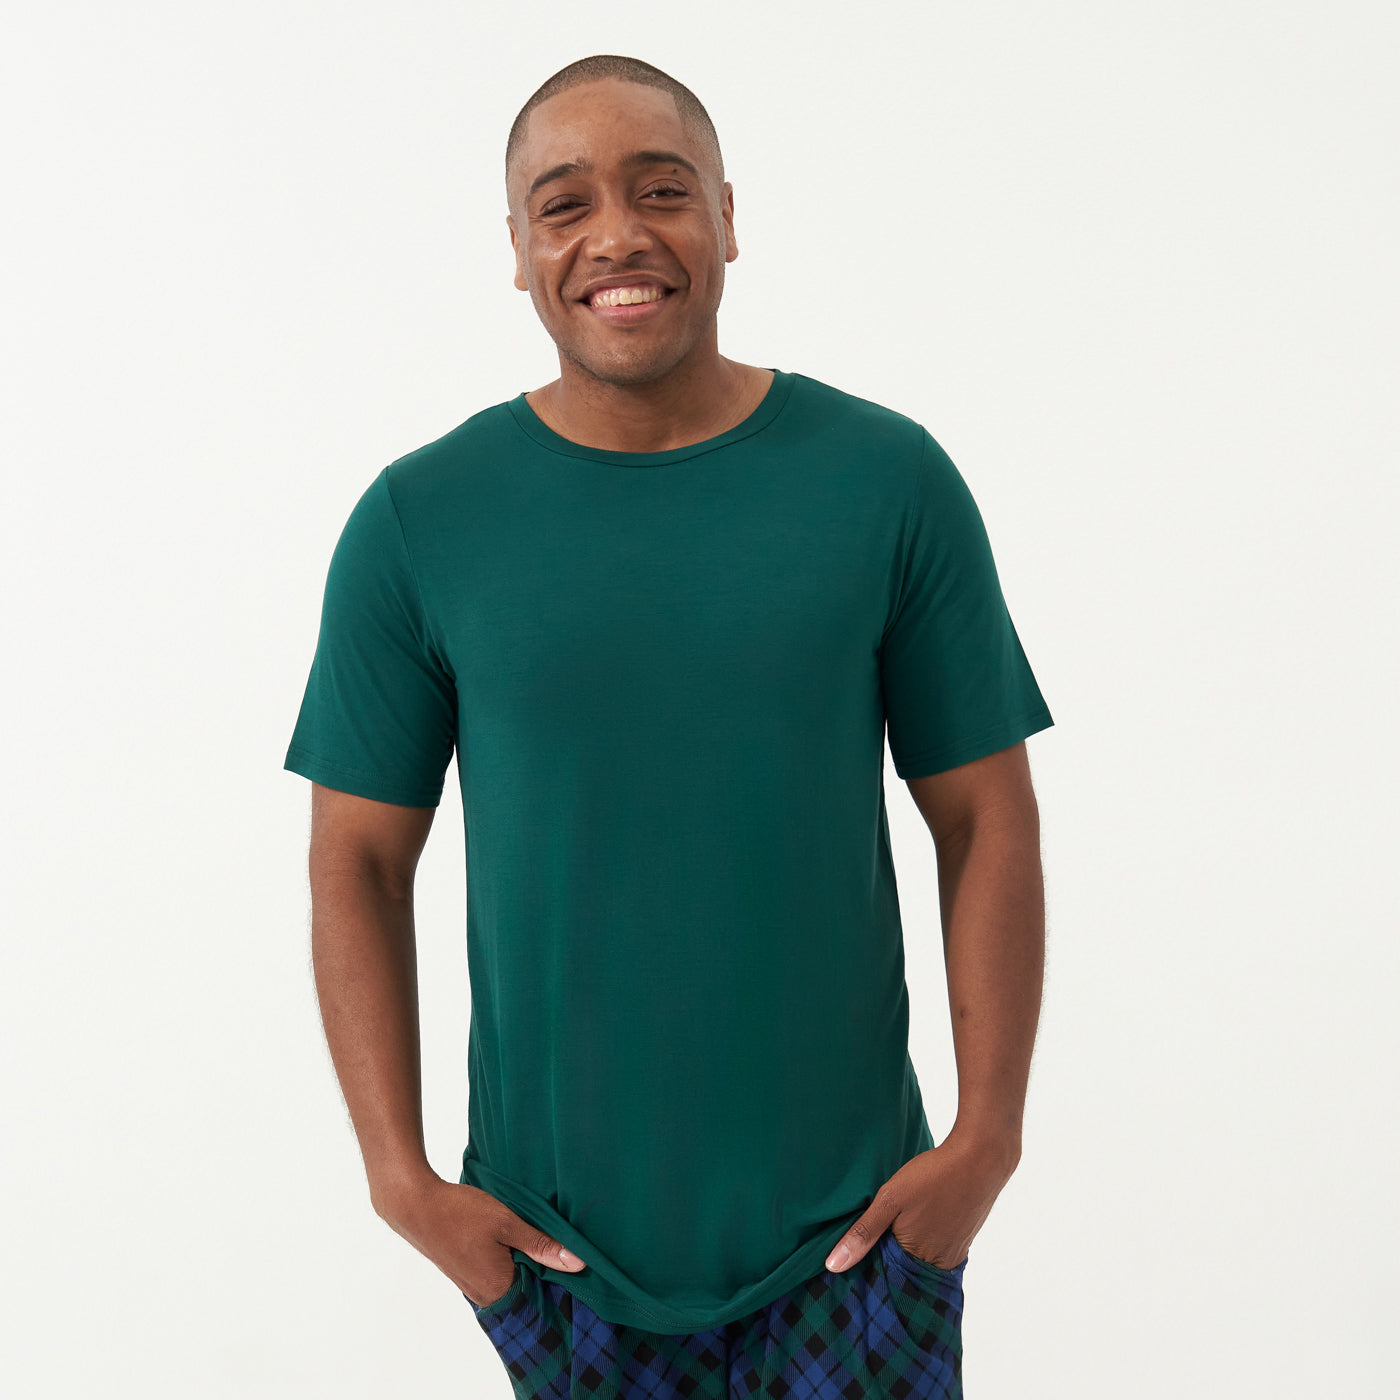 Man wearing an Emerald men's short sleeve pajama top and coordinating pants